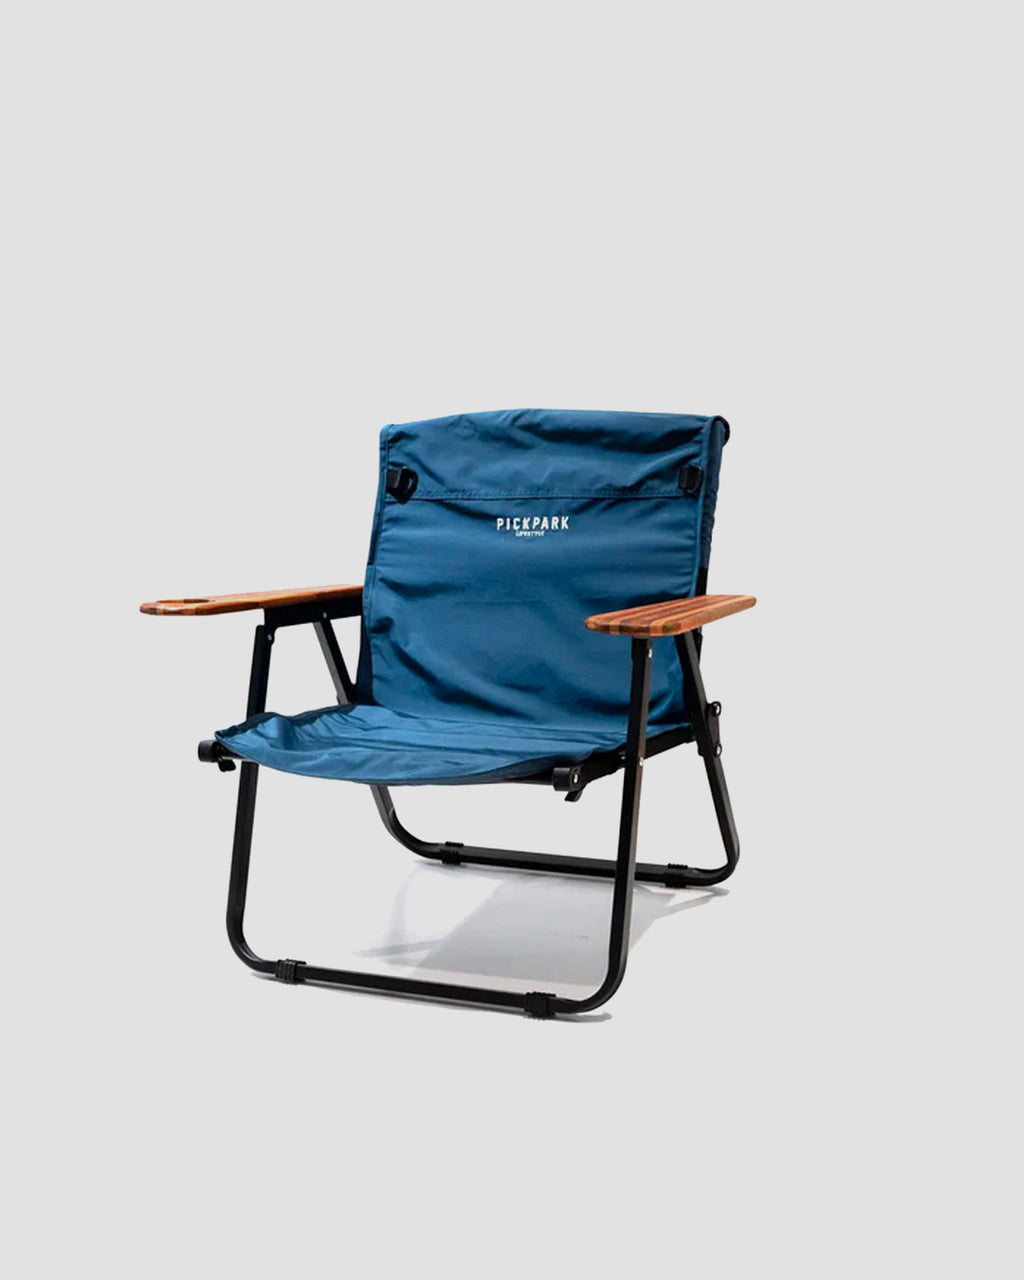 PICKPARK x SFZ Foldable Chair